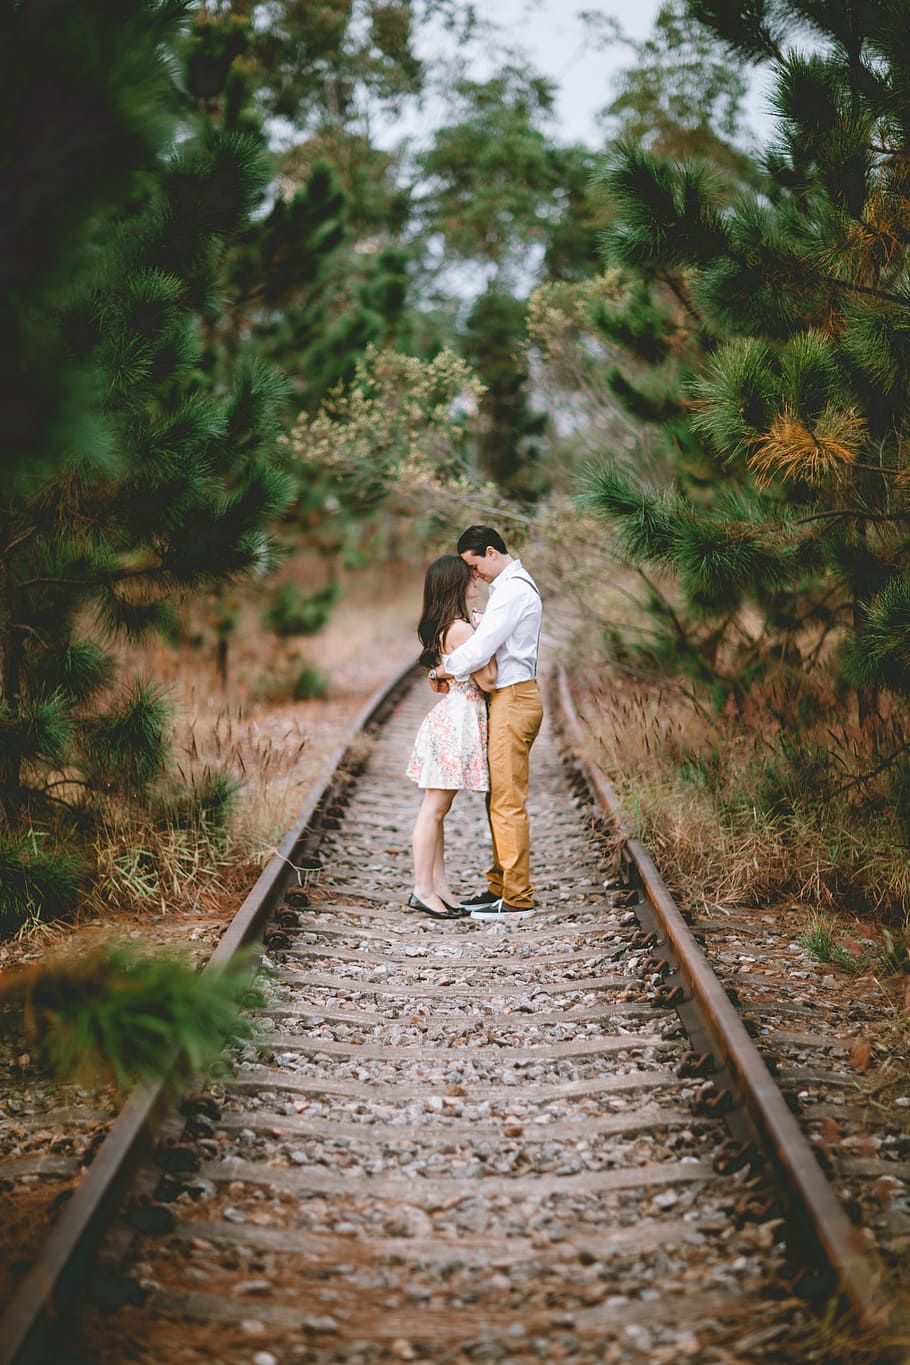 man, woman, hogging, train rail, nature, love, couple in love, grooms, romantic, landscape